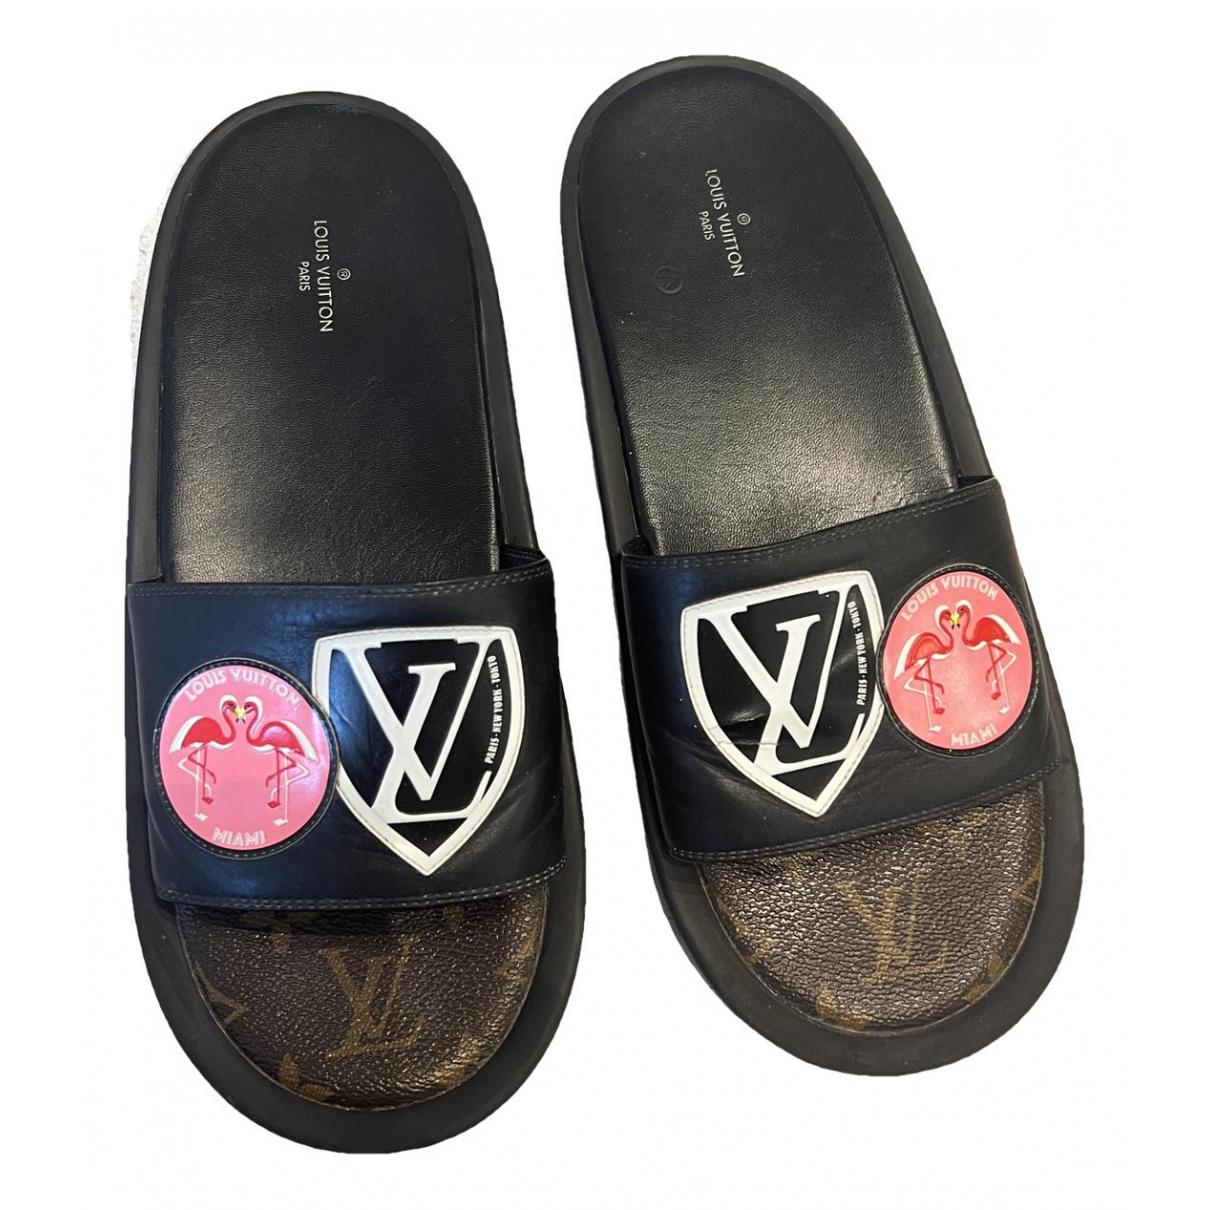 Buy Cheap Louis Vuitton Shoes for Women's Louis Vuitton Sandals #99920871  from